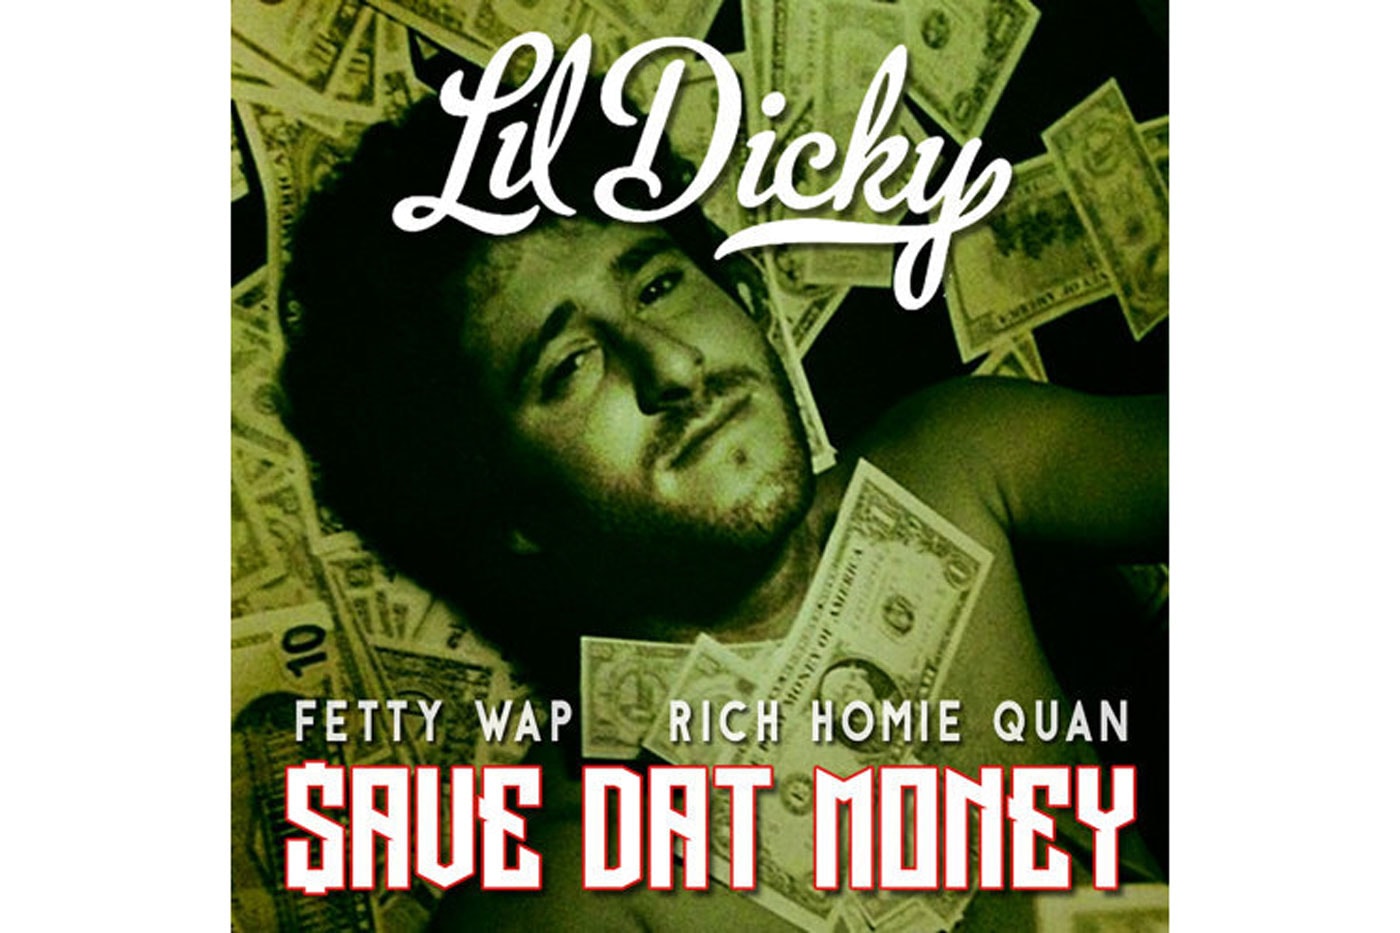 Lil Dicky featuring Fetty Wap & Rich Homie Quan - $ave Dat Money